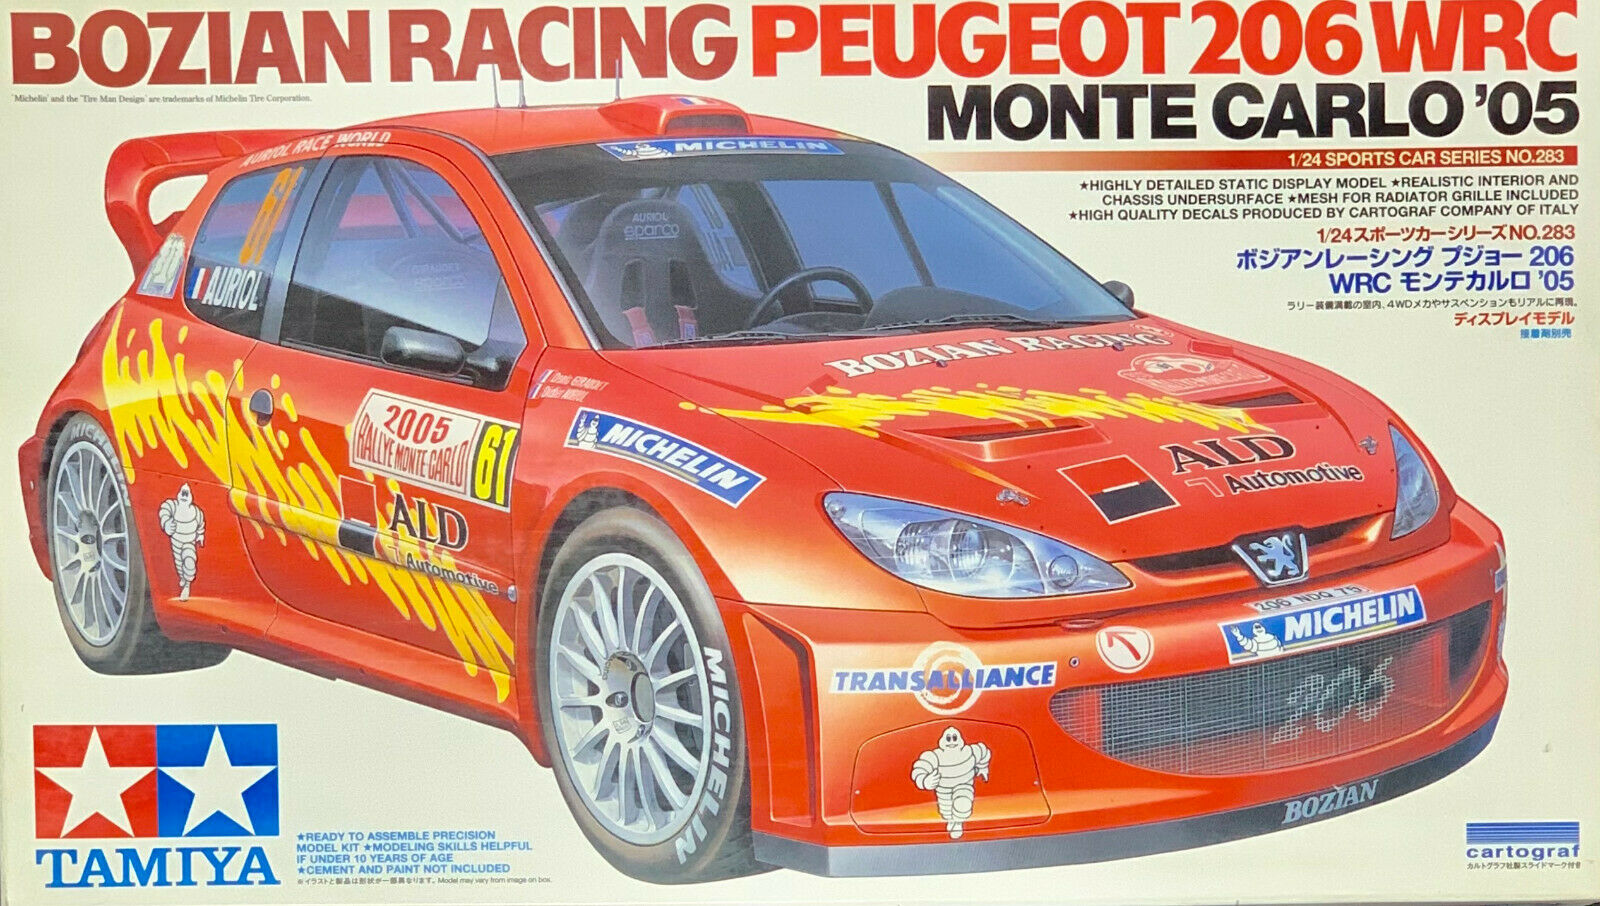 TAMIYA 24283 1/24 Bozian Racing Peugeot 206 WRC - Monte Carlo '05